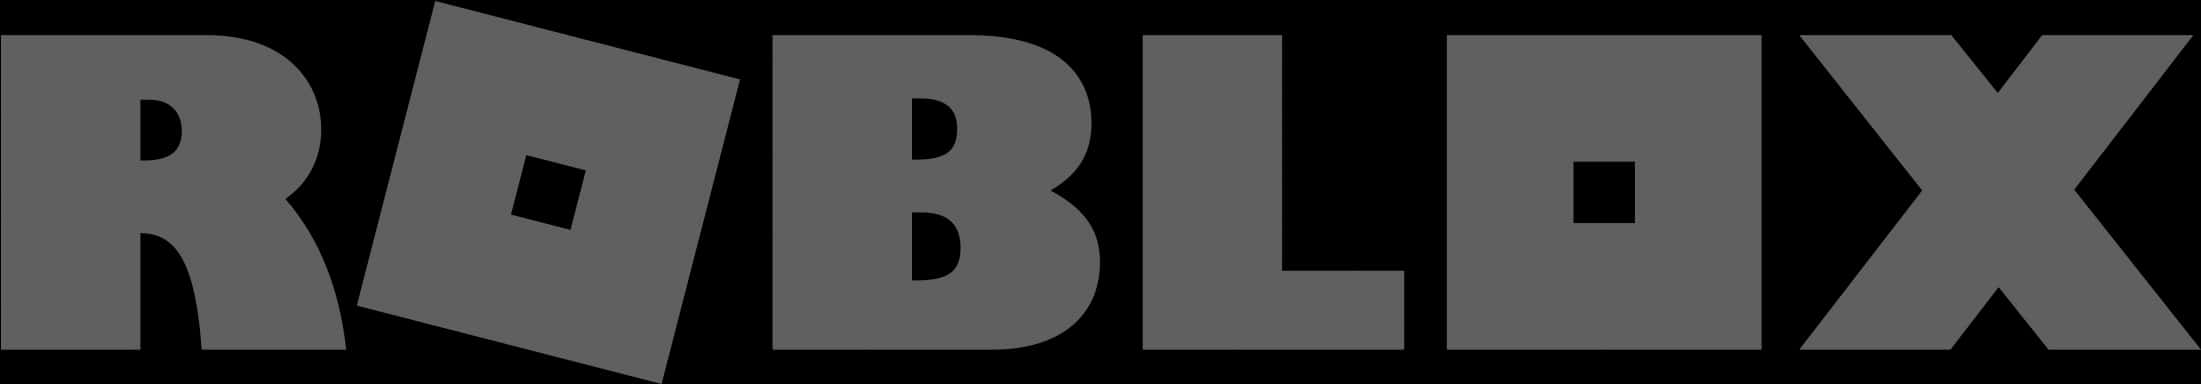 Roblox Logo Blackand White